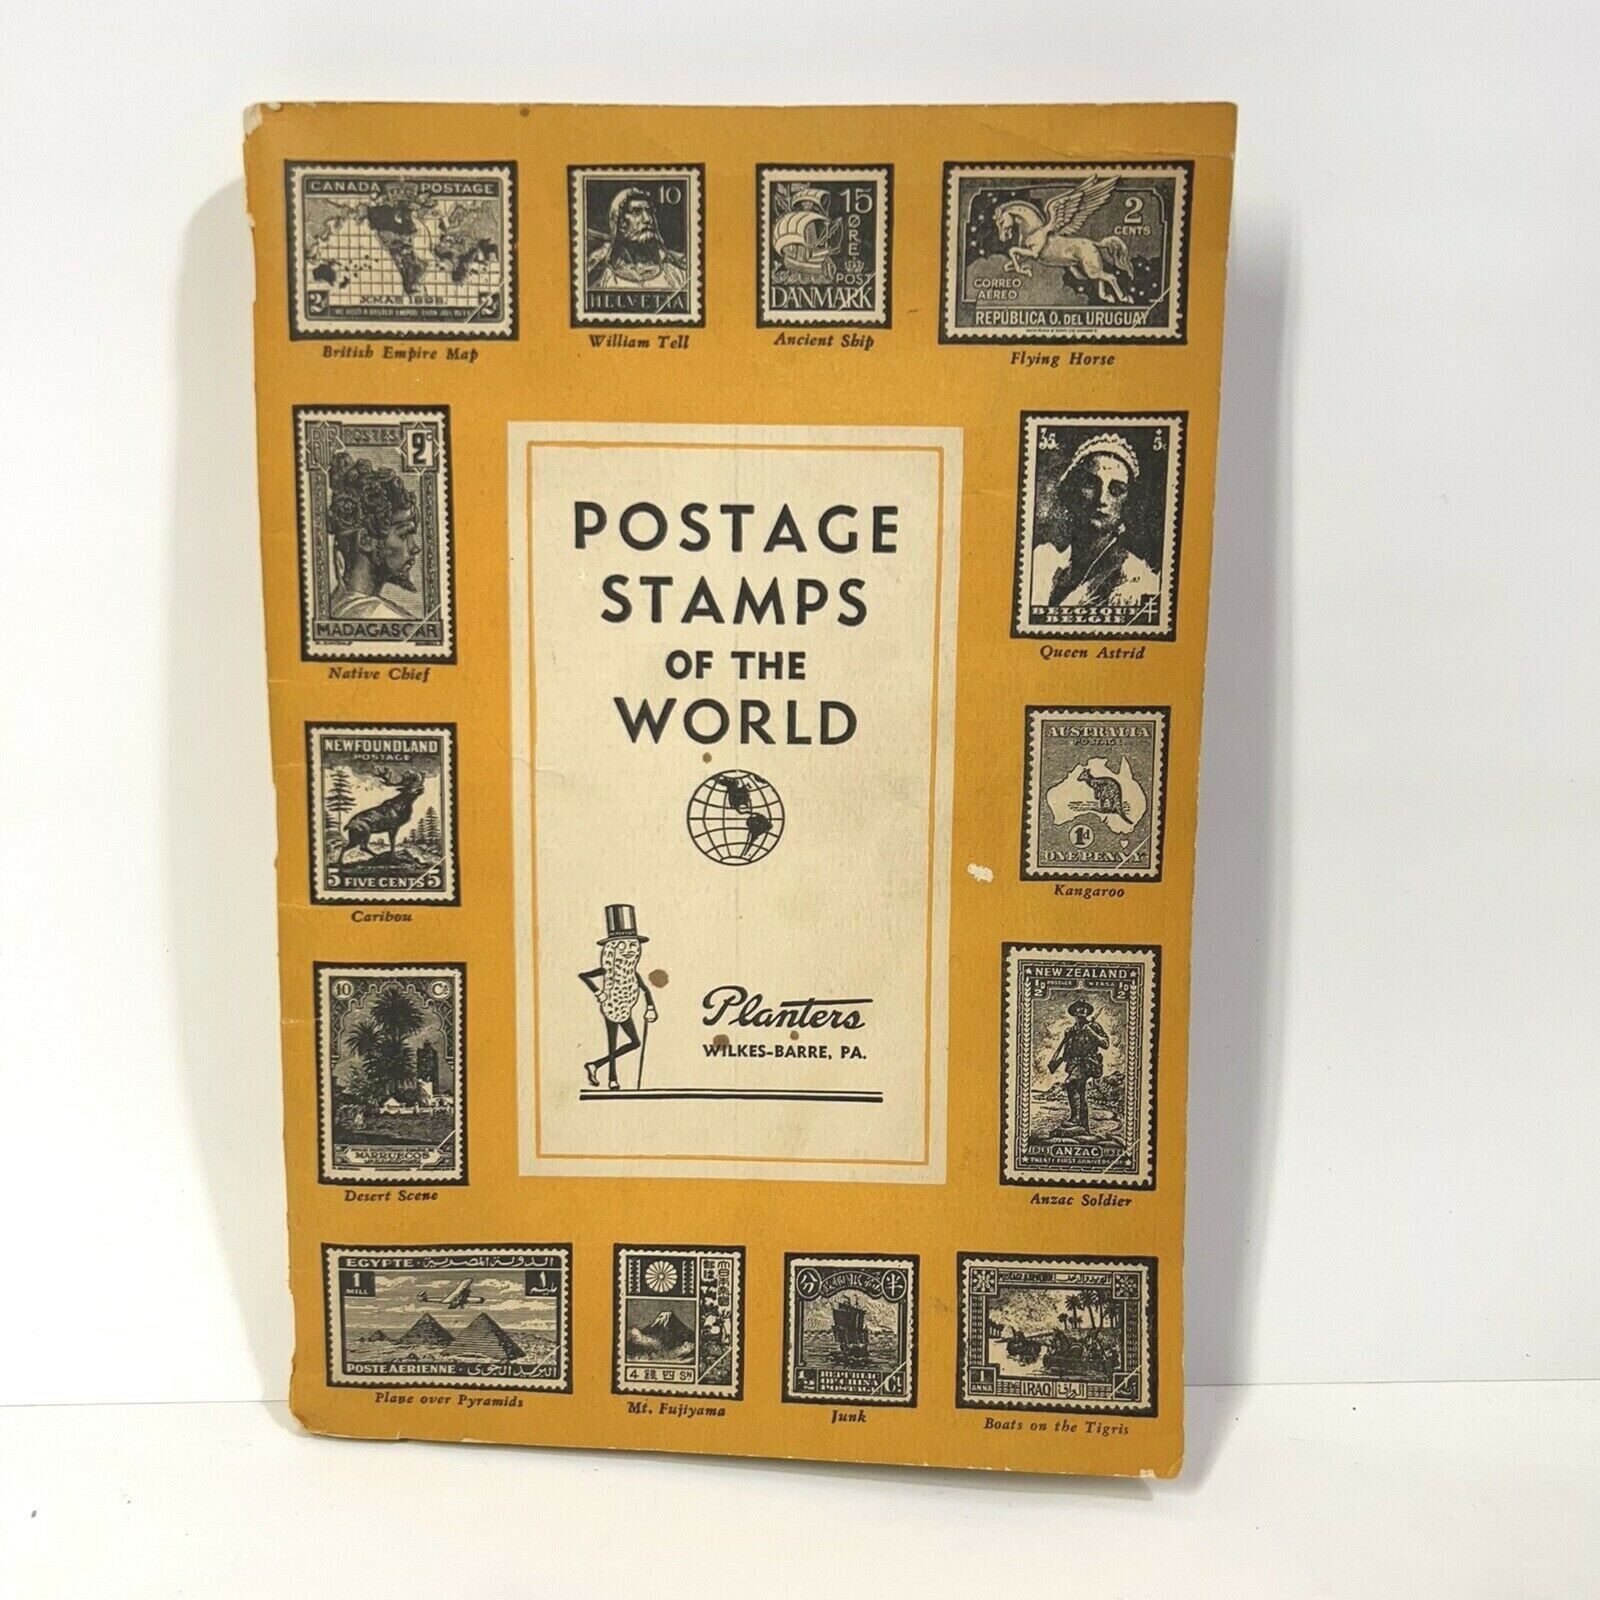 RARE VINTAGE PLANTERS PEANUTS MR. PEANUT POSTAGE STAMPS OF THE WORLD BOOK 1940S